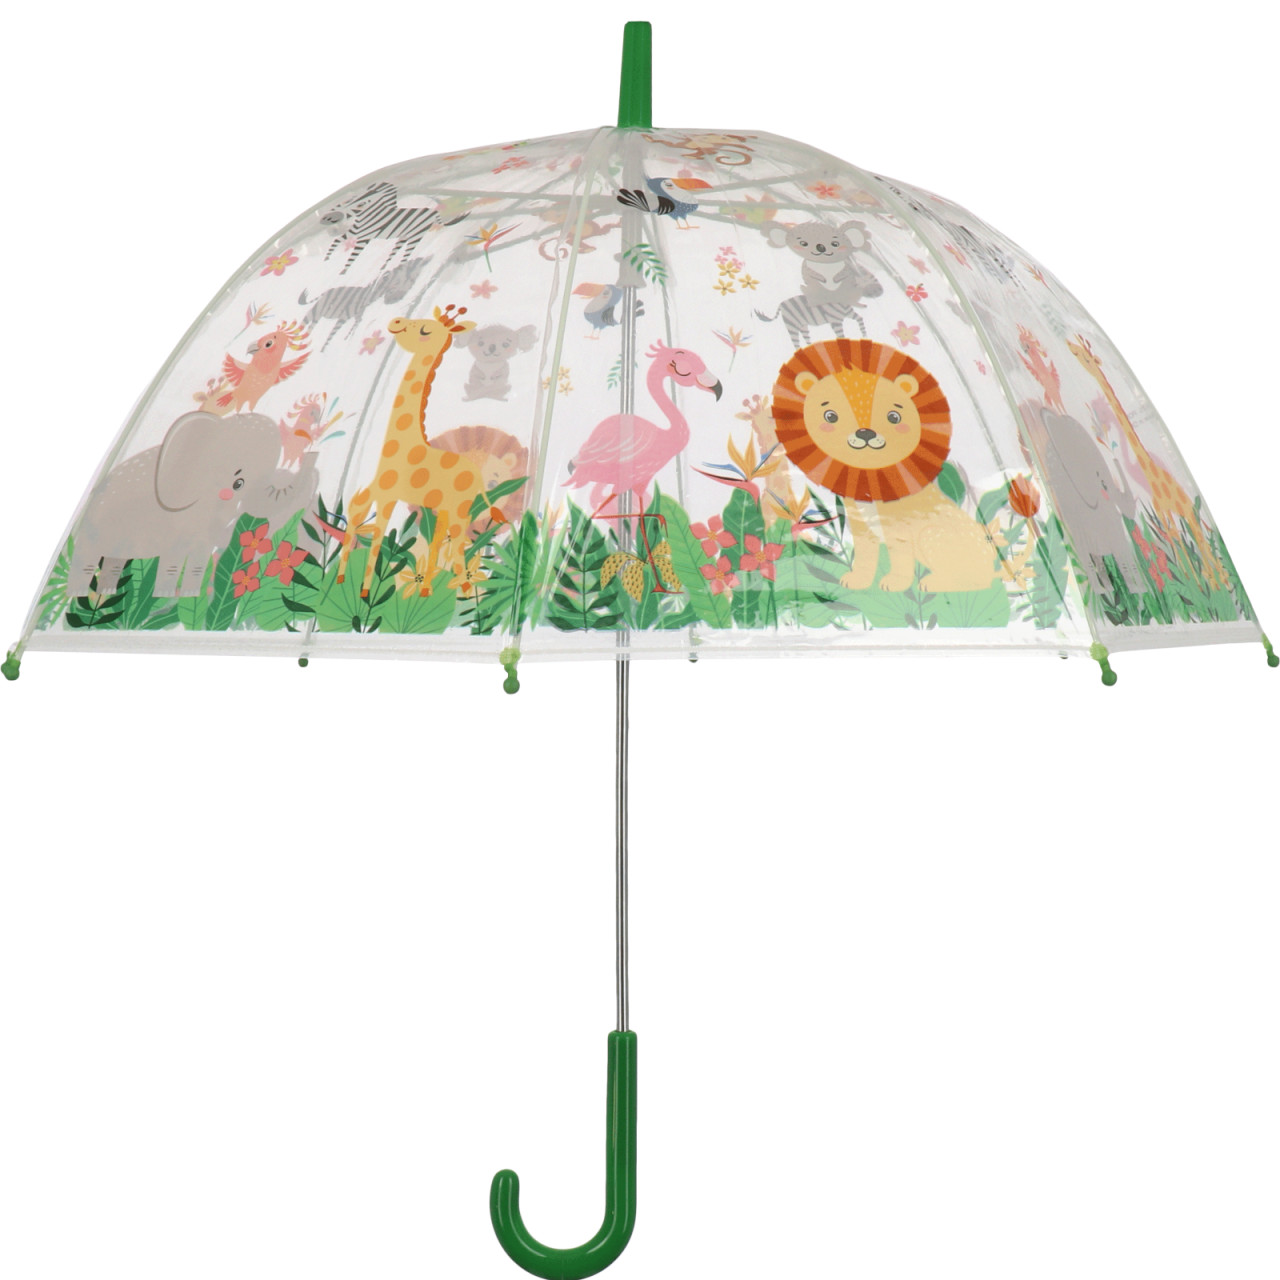 Regenschirm Kinder Dschungel transparent